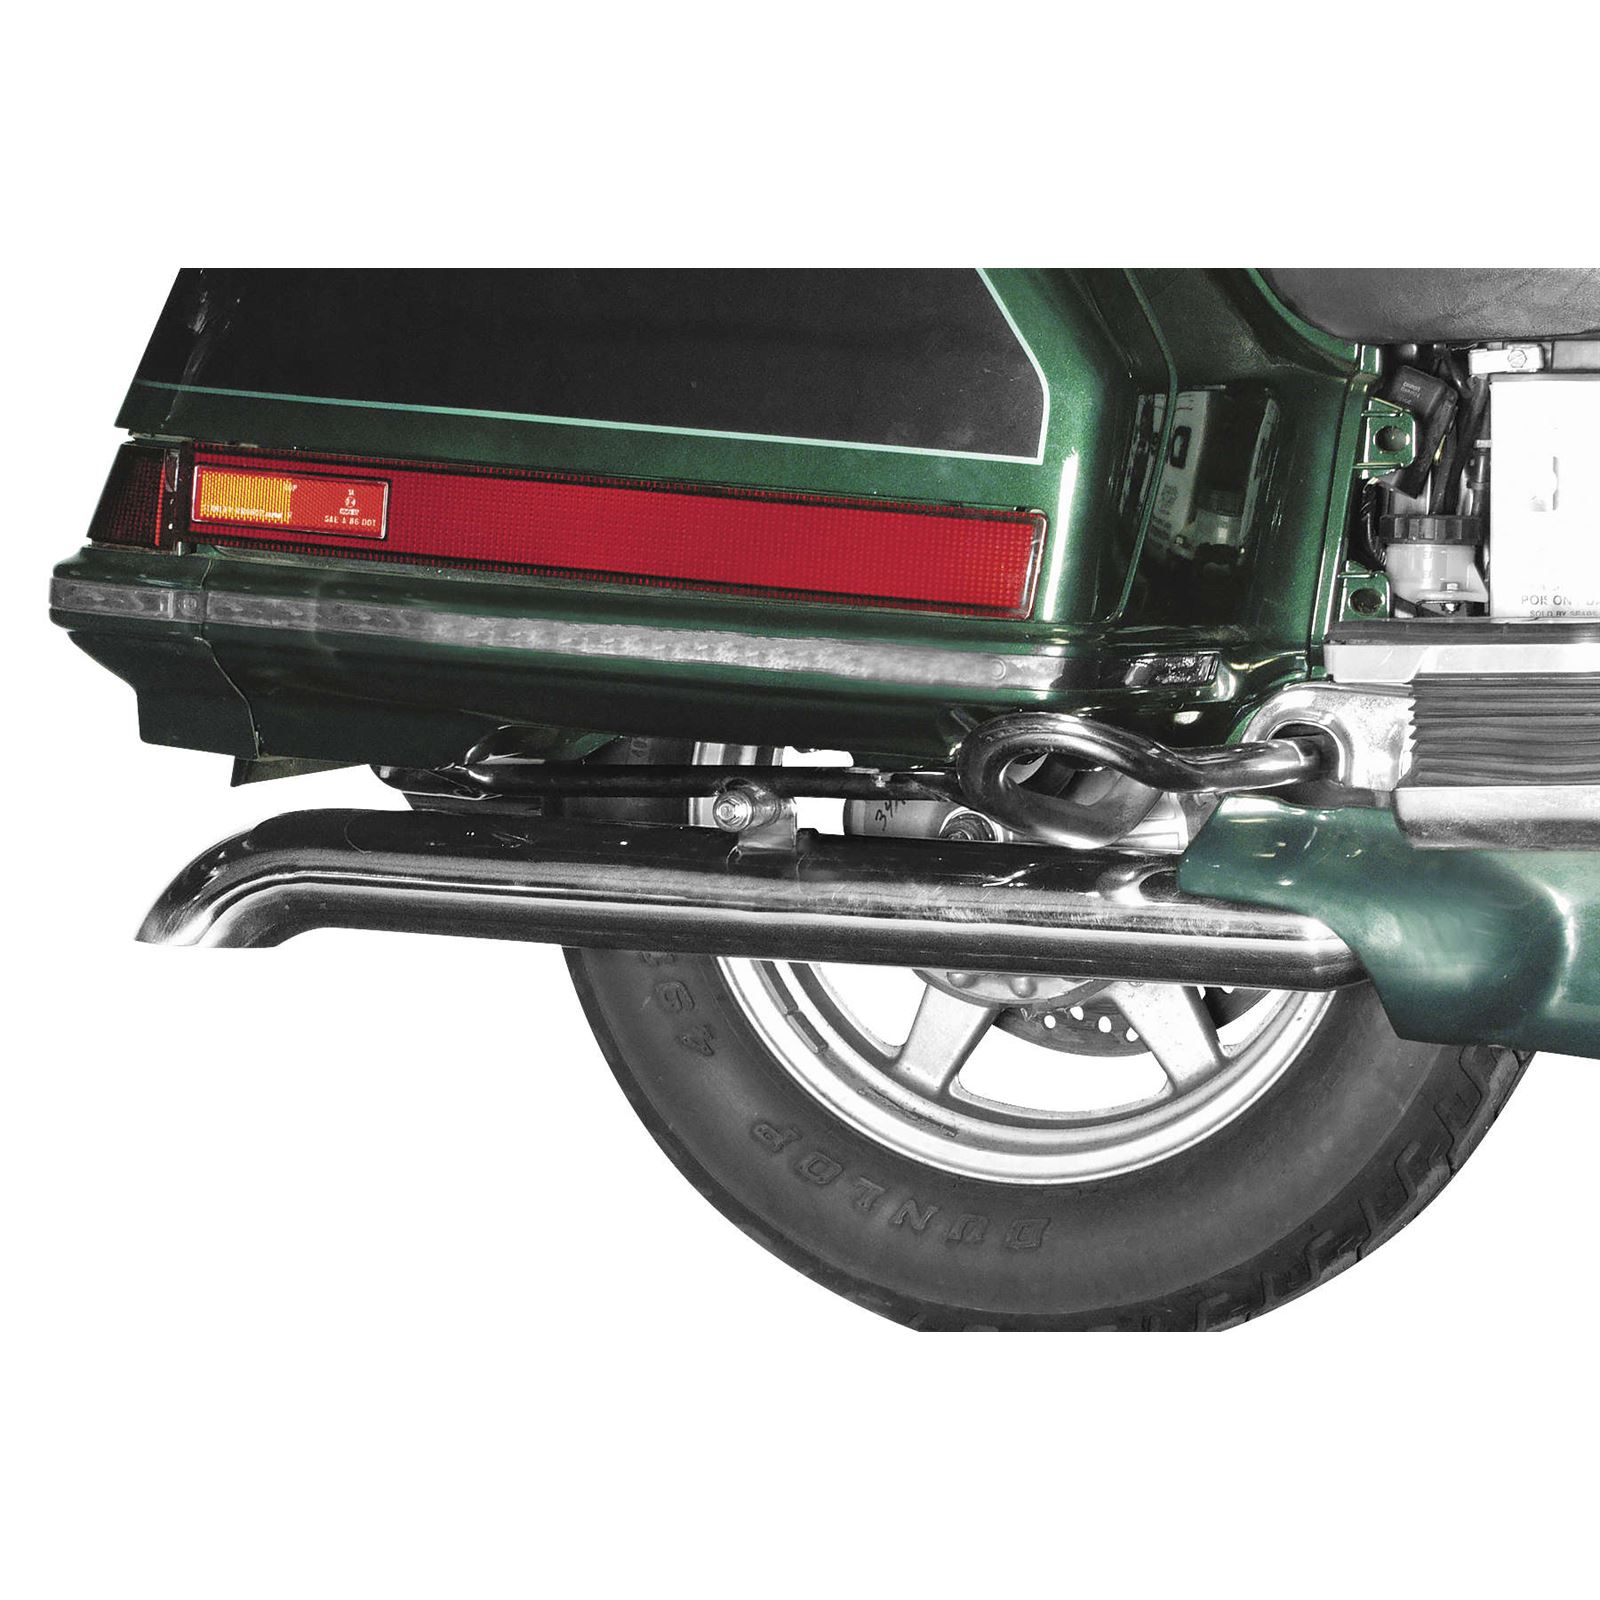 Mac Exhaust System Muffler - Motorcycle, ATV / UTV & Powersports Parts